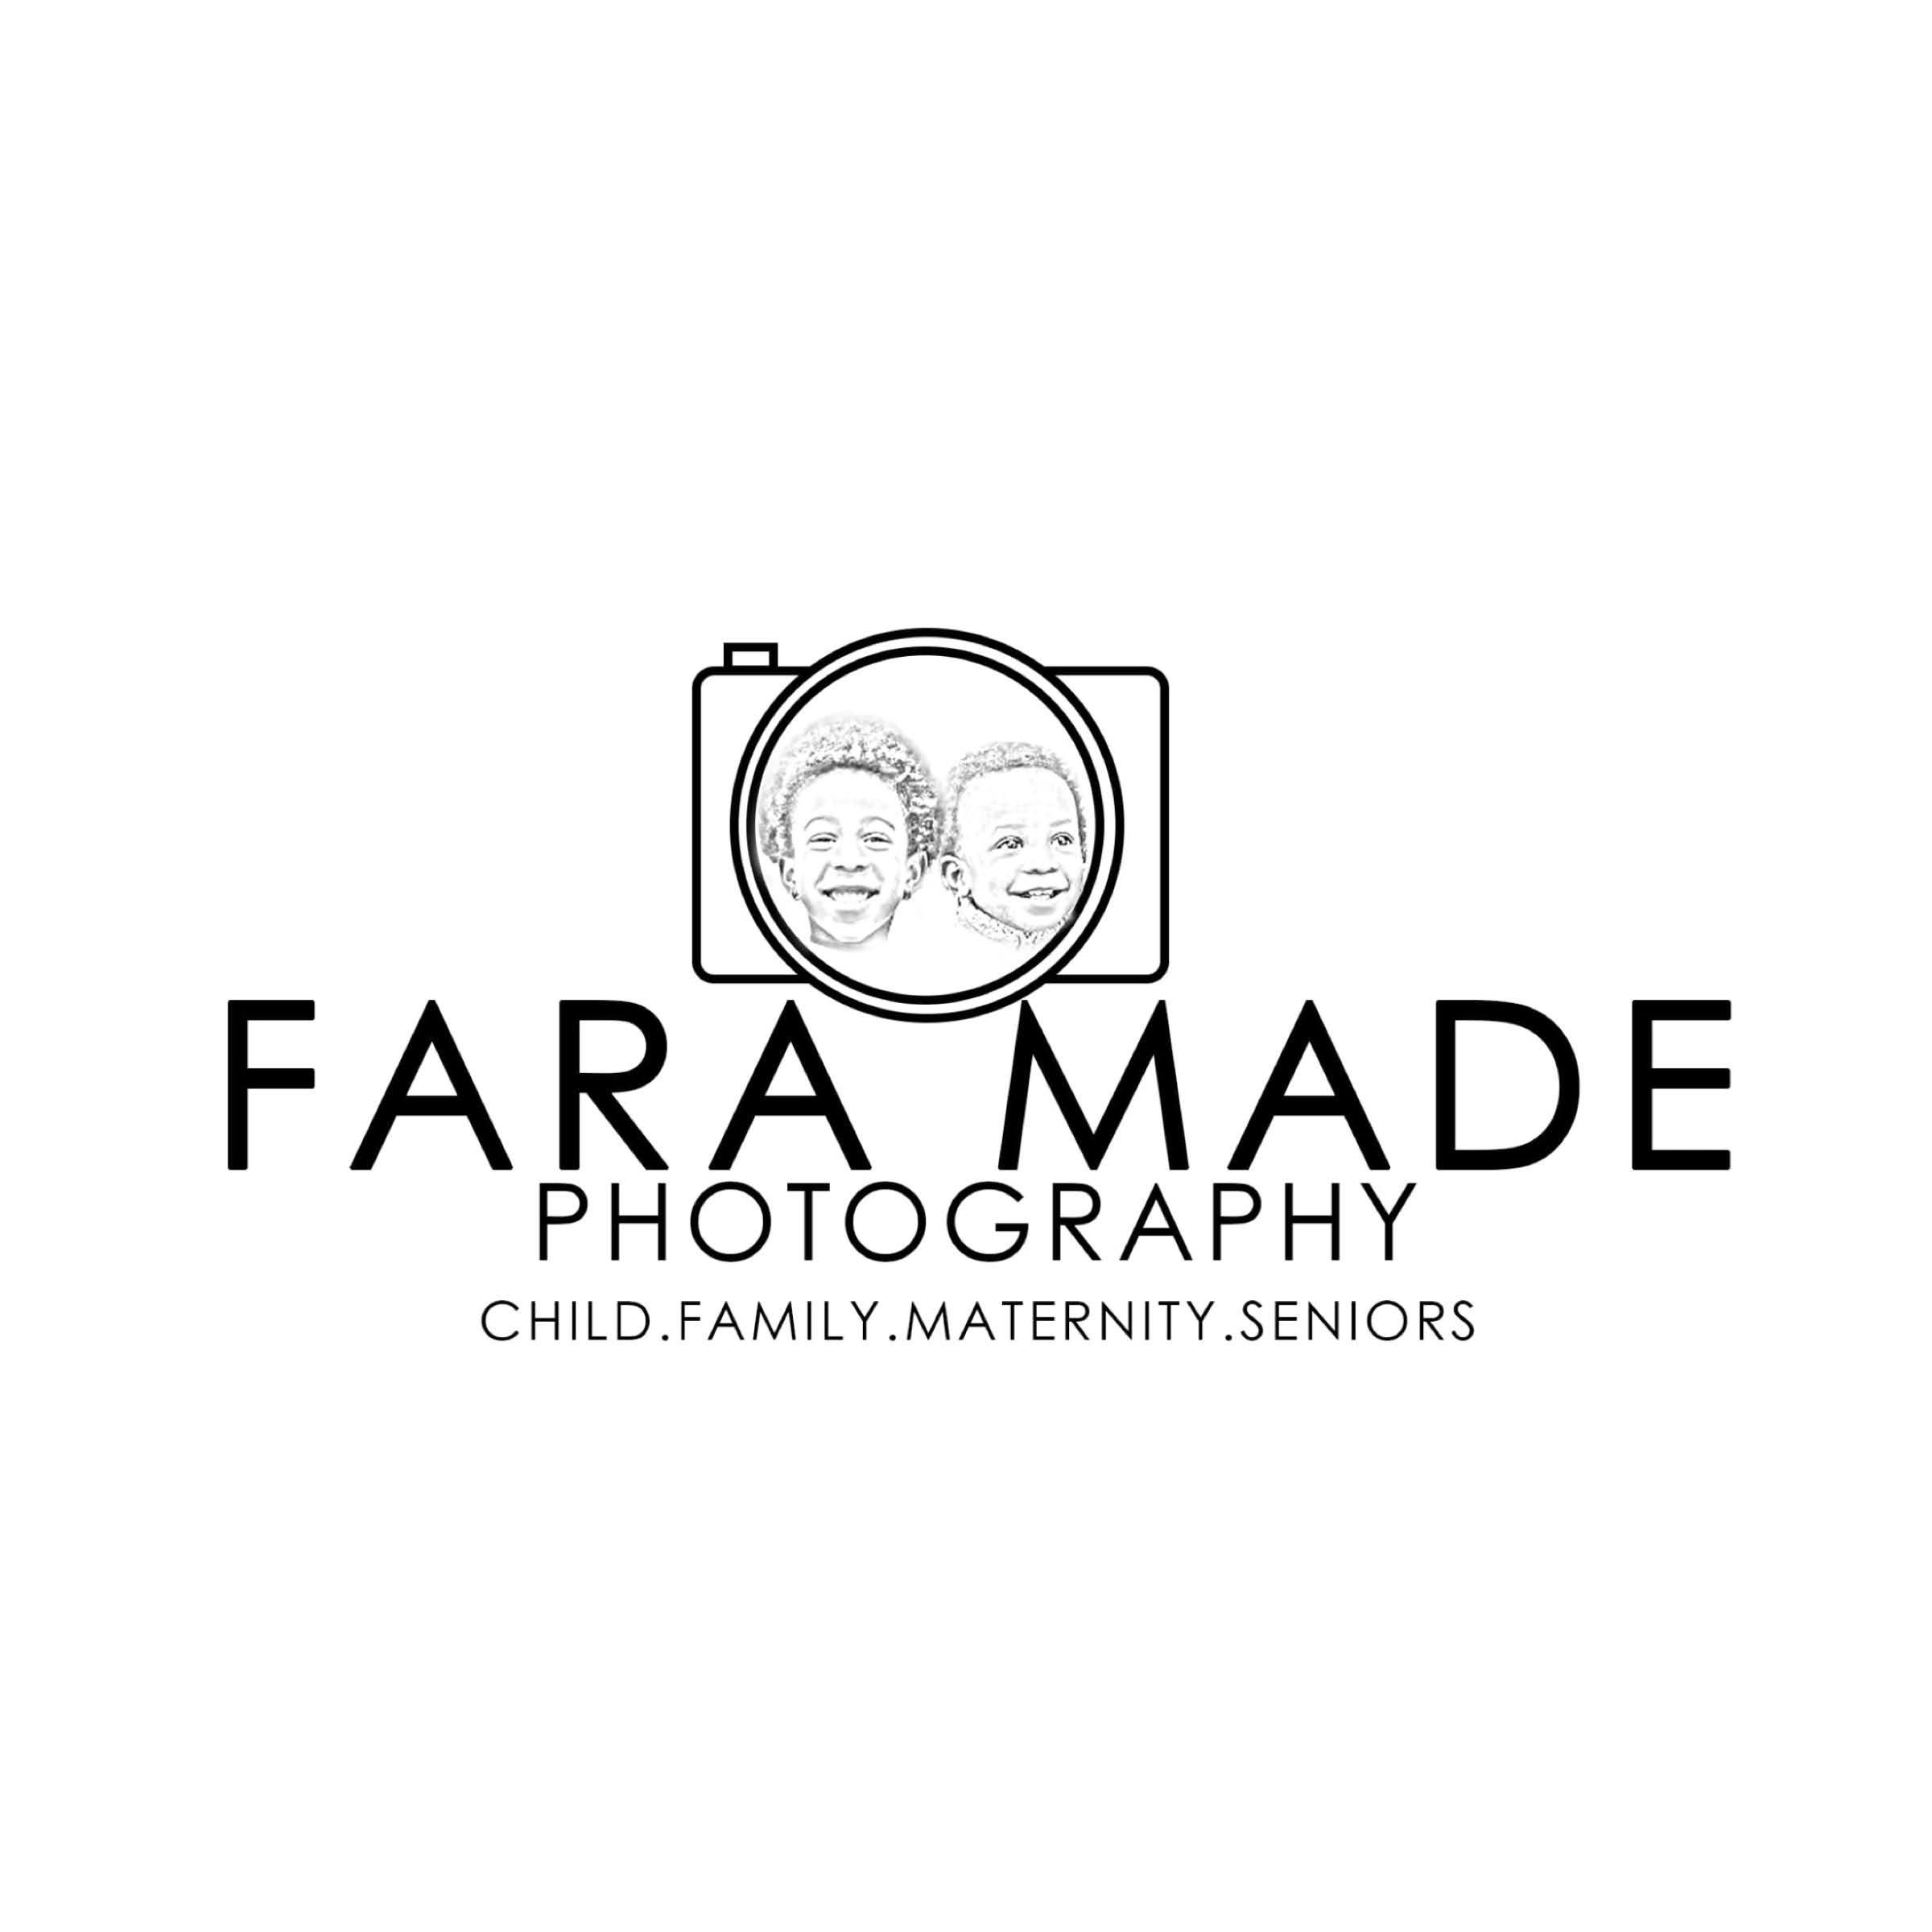 Faramade Photography